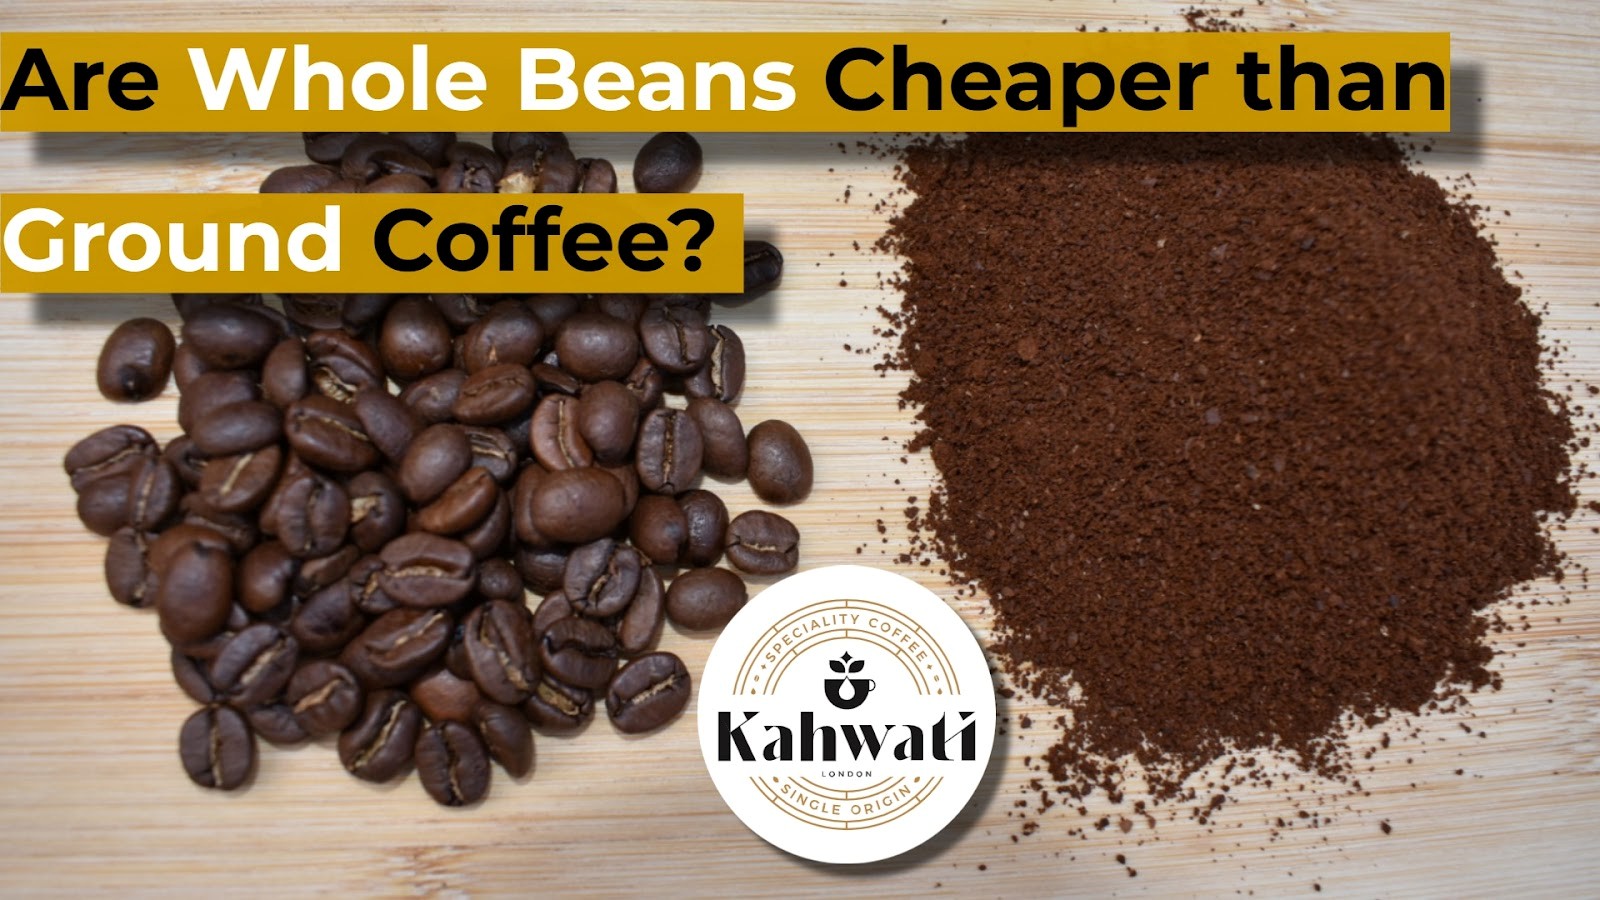 Whole Beans Cheaper than Ground Coffee